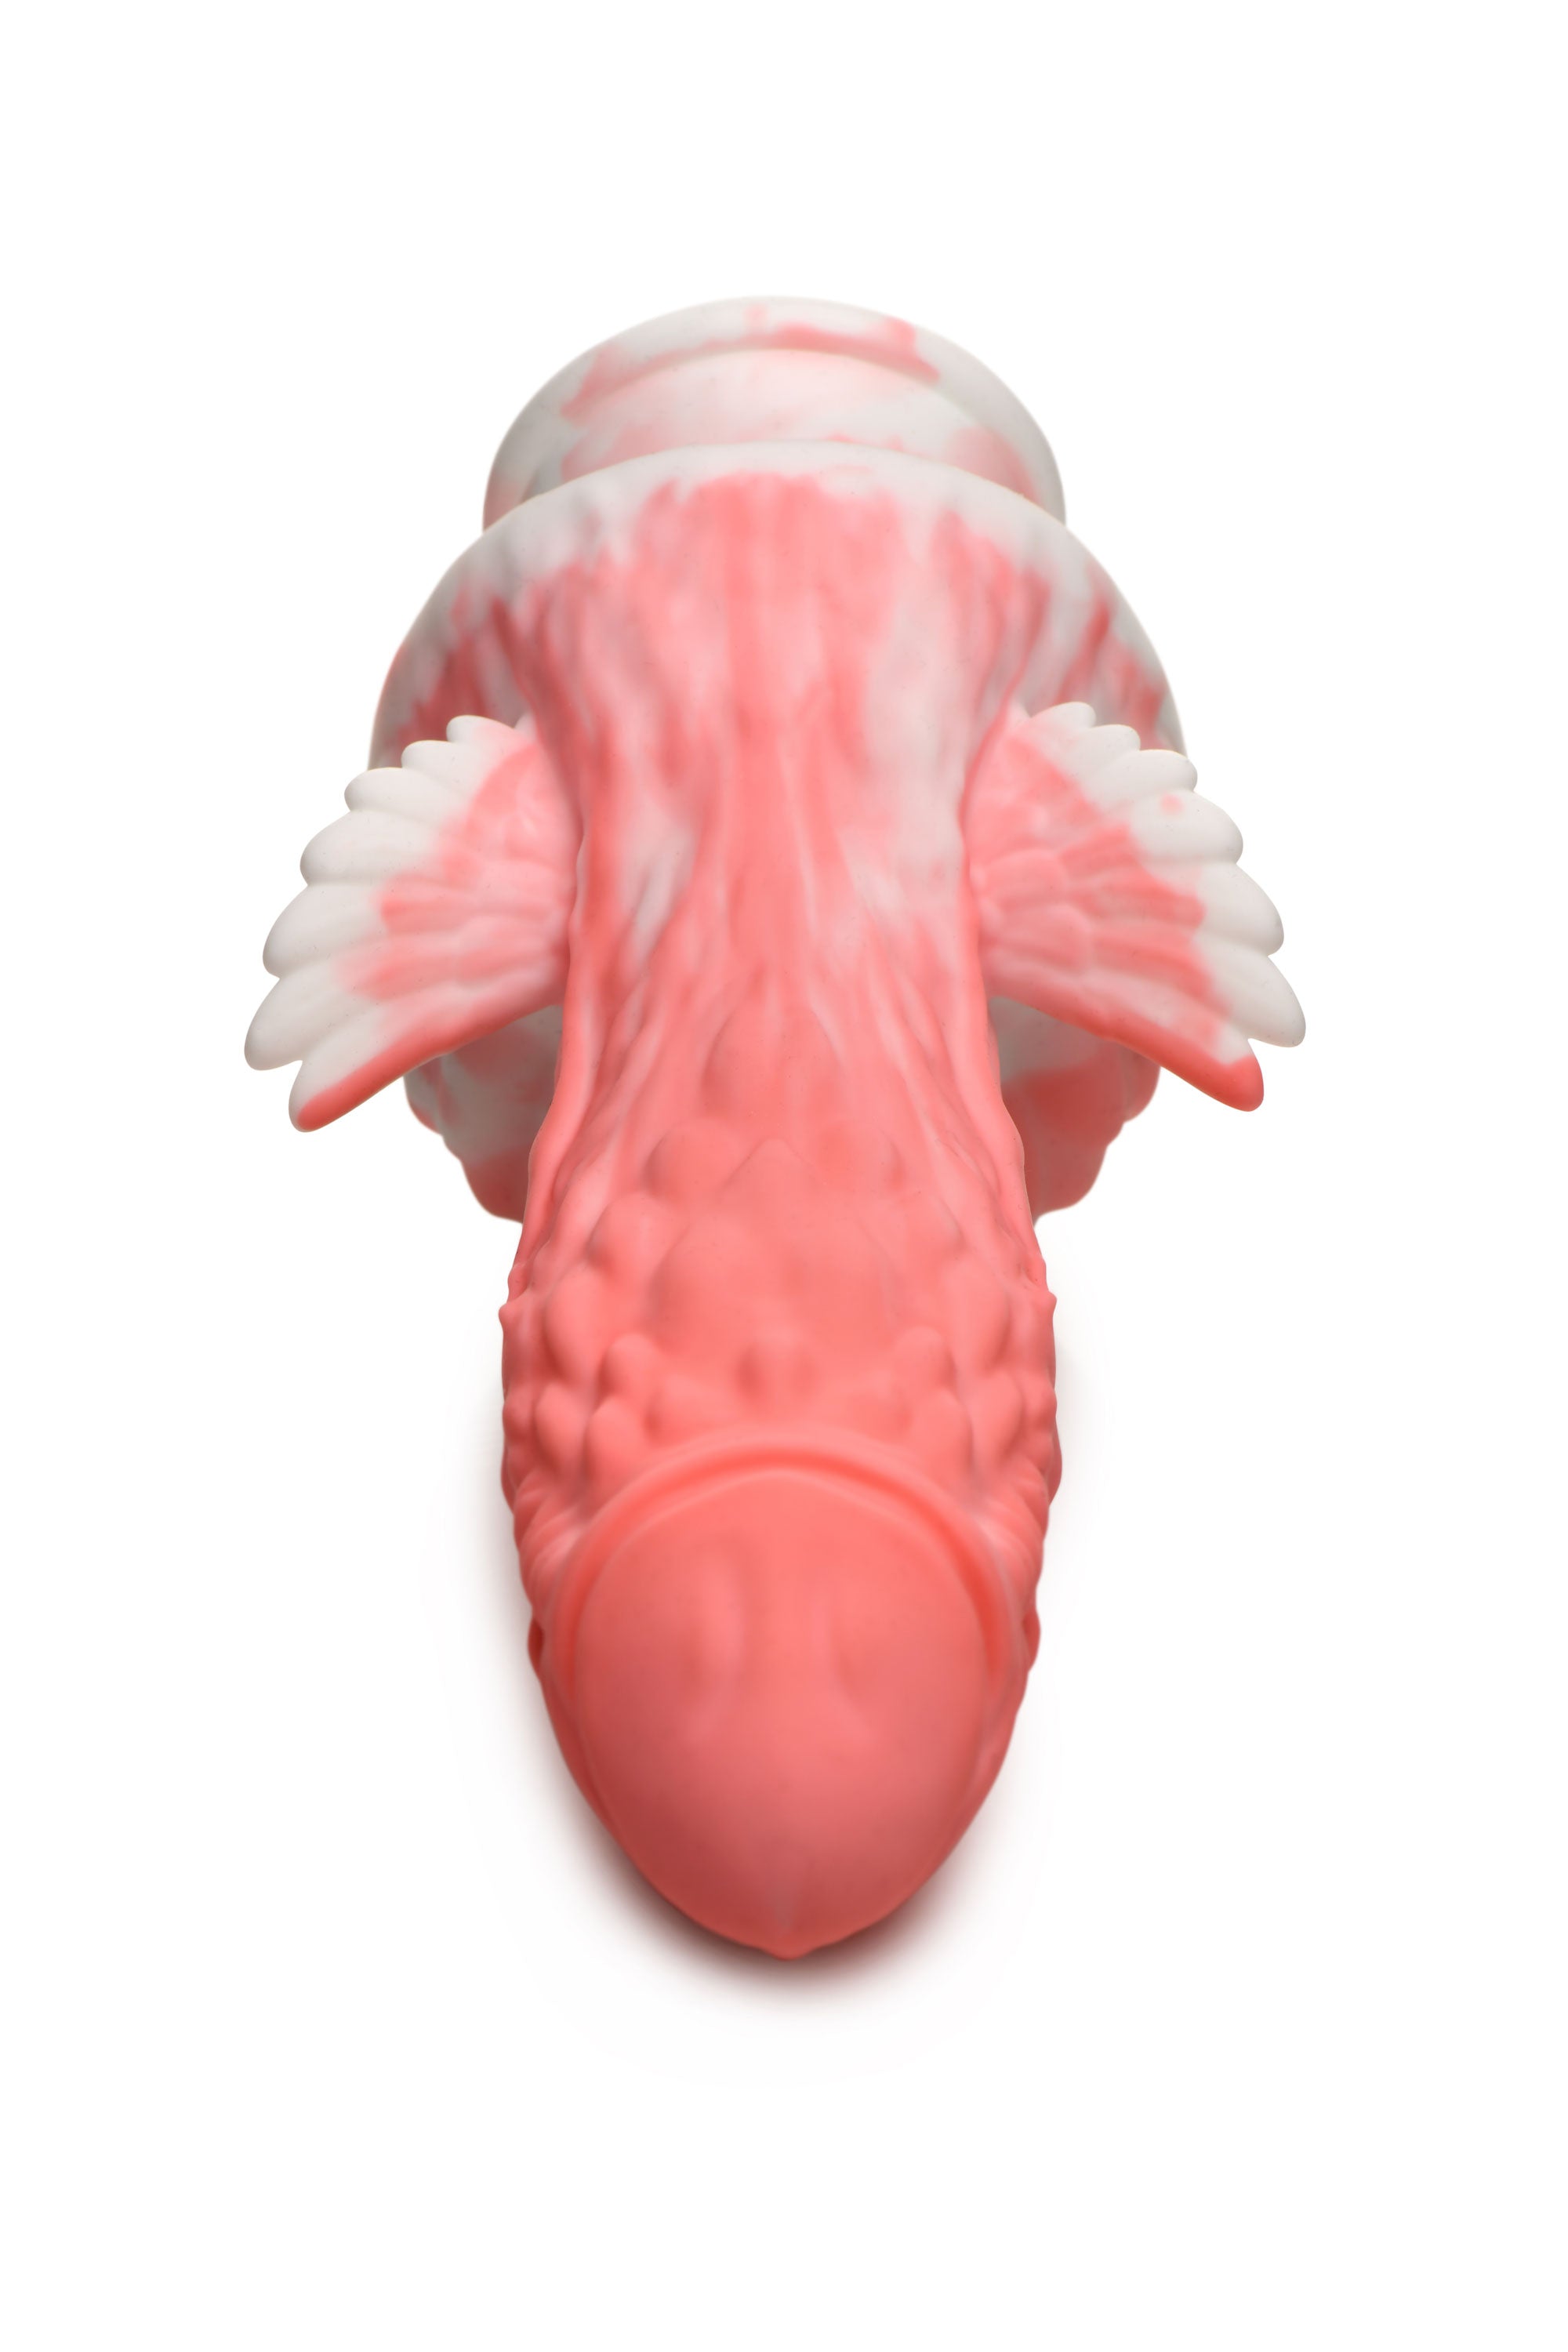 Pegasus Pecker Winged Silicone Dildo - Pink/white-5